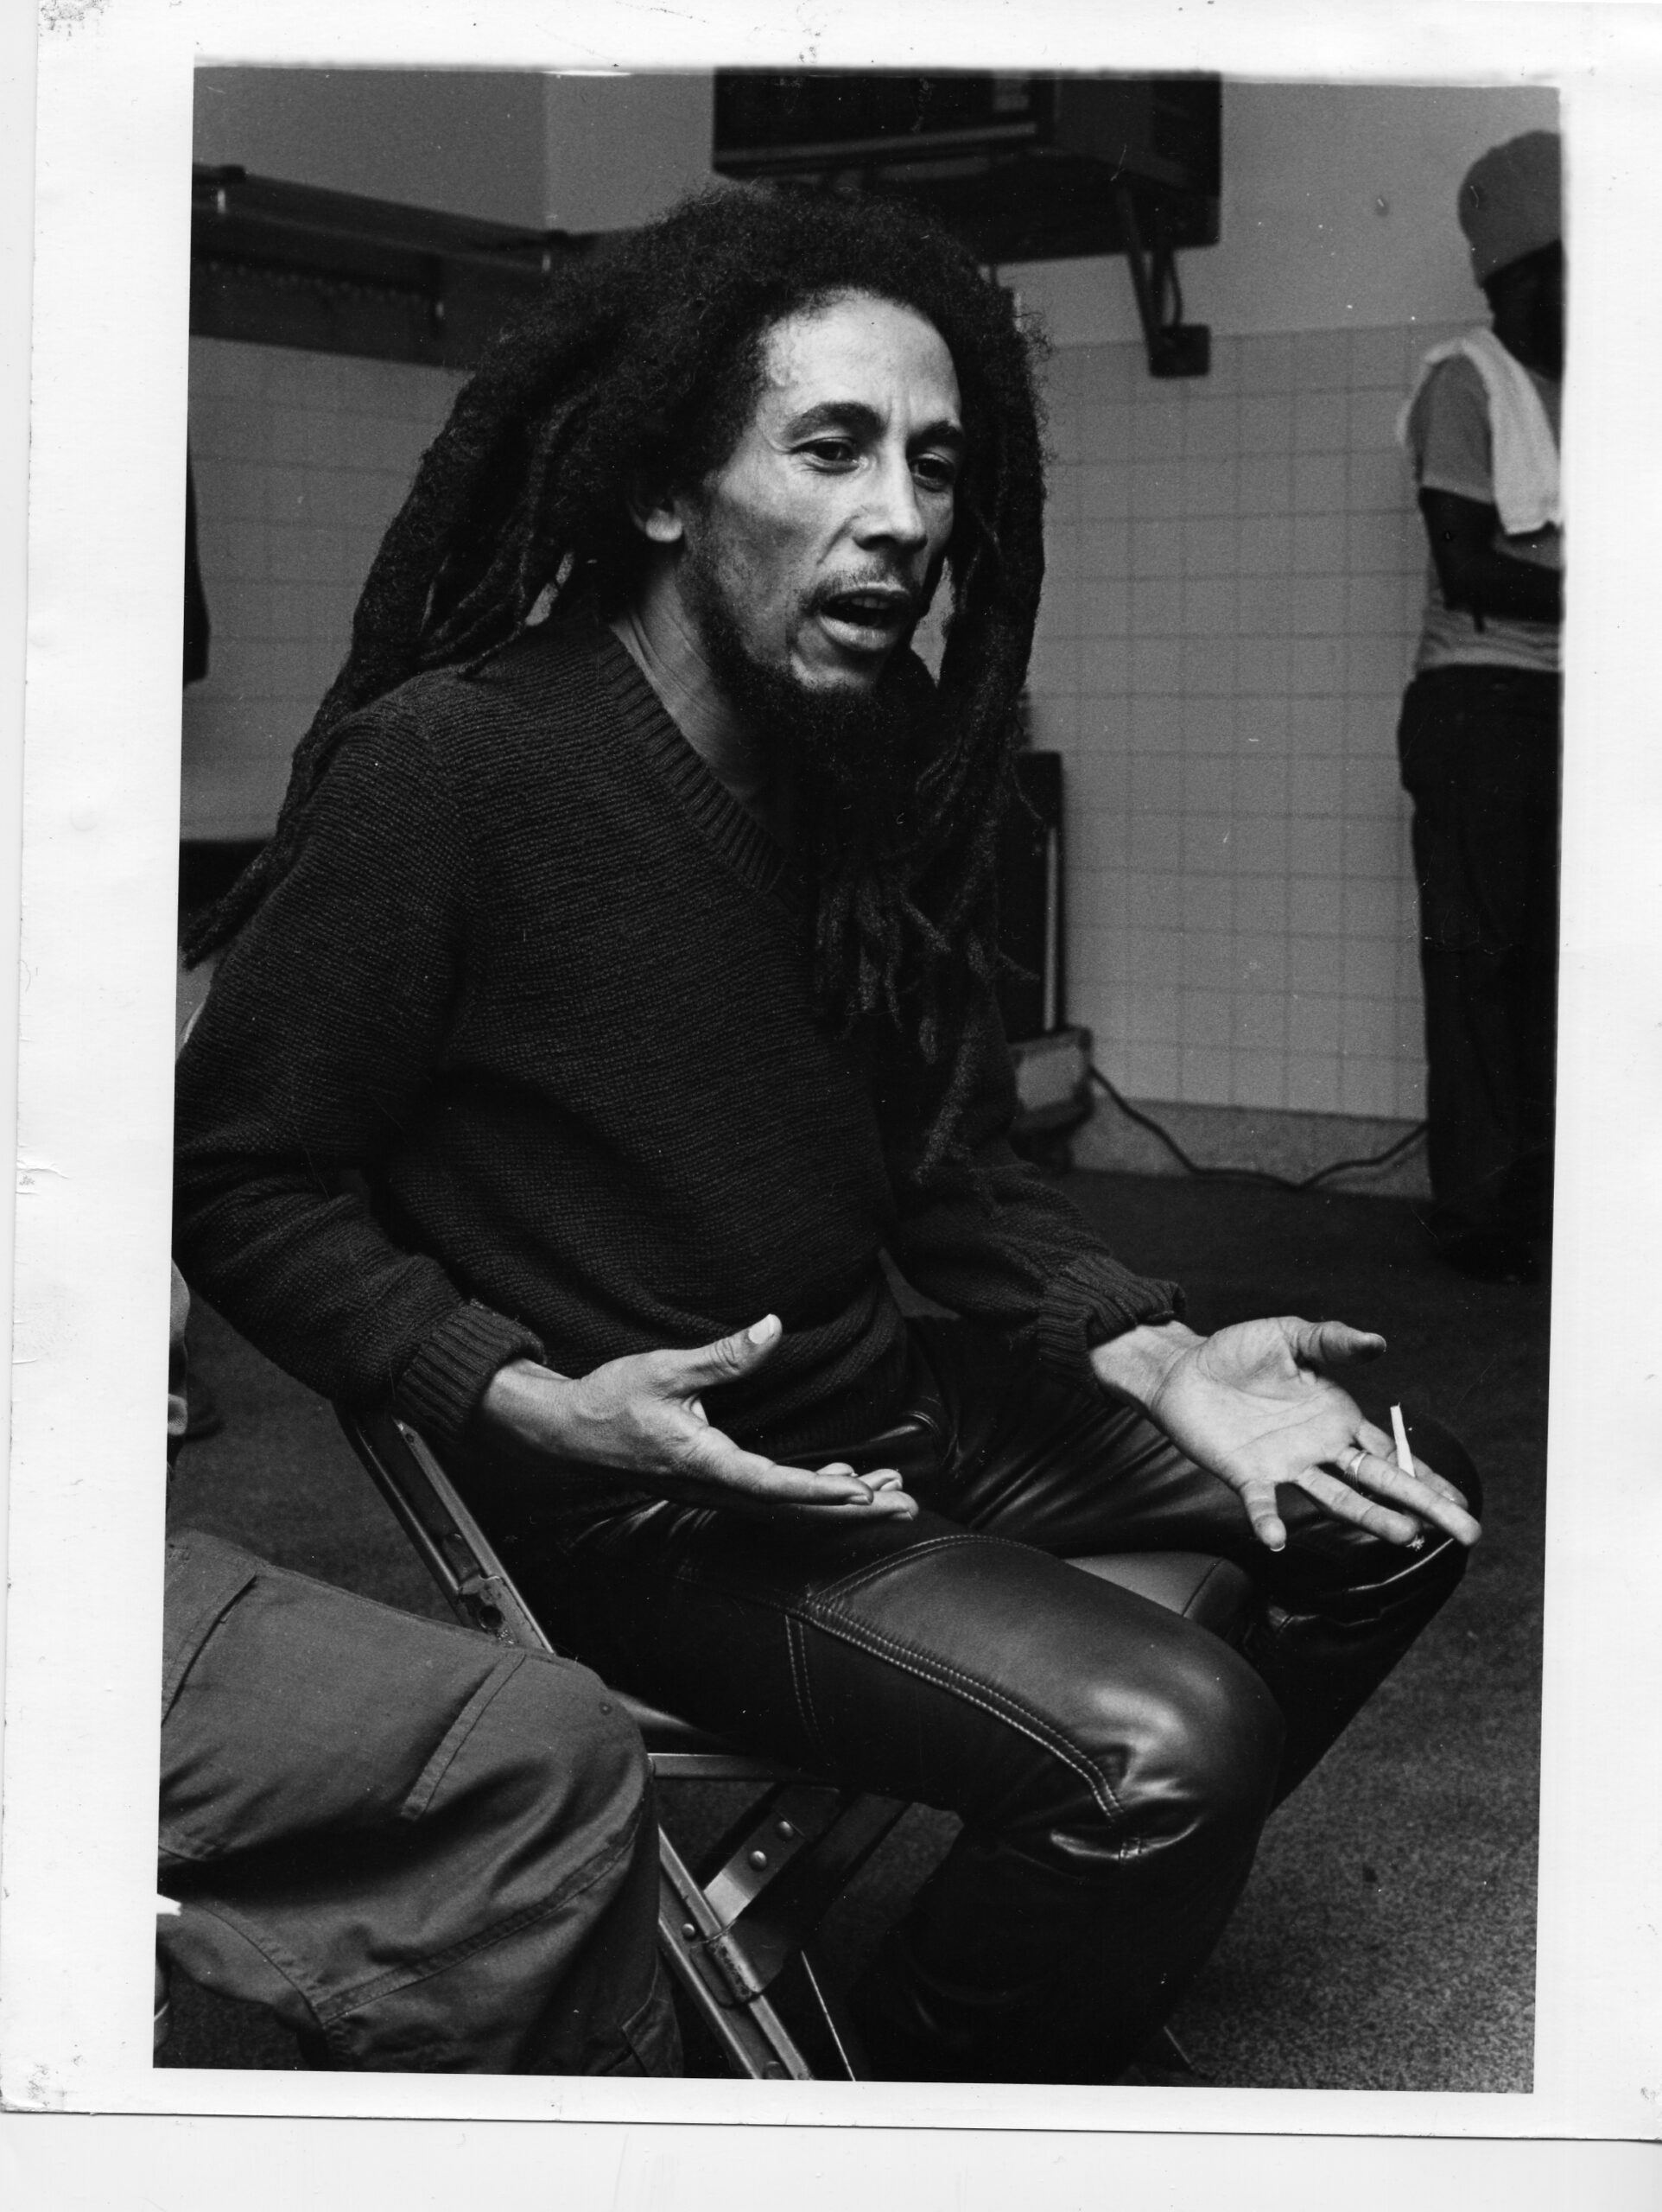 VintageCatchaFire Tuff Gong Bob Marley Signature Bandana